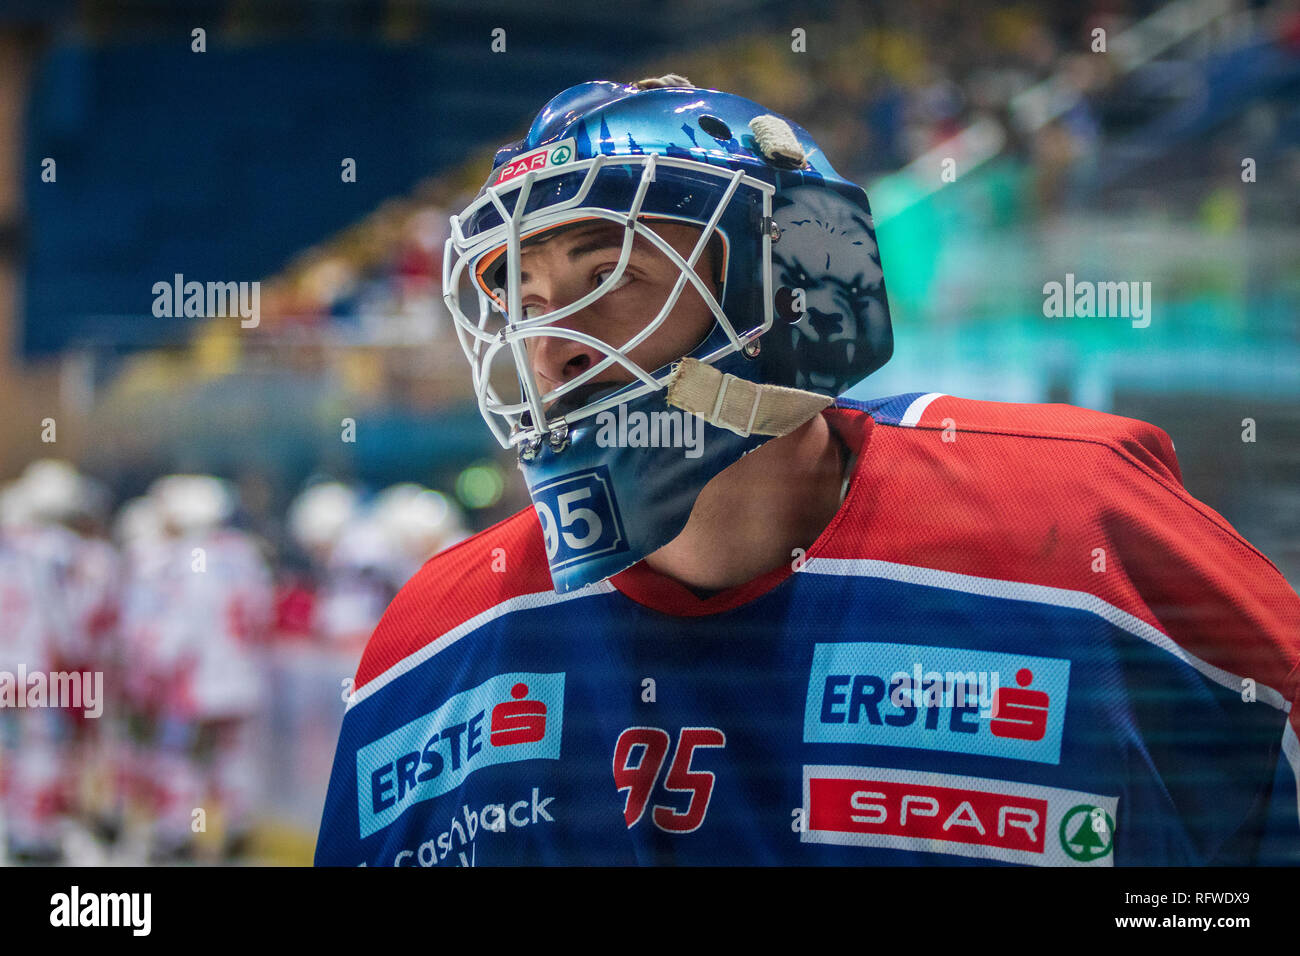 ZAGREB, CROATIA - DECEMBER 30, 2018: EBEL ice hockey league match between Medvescak Zagreb and KAC. Hockey goalie. Stock Photo